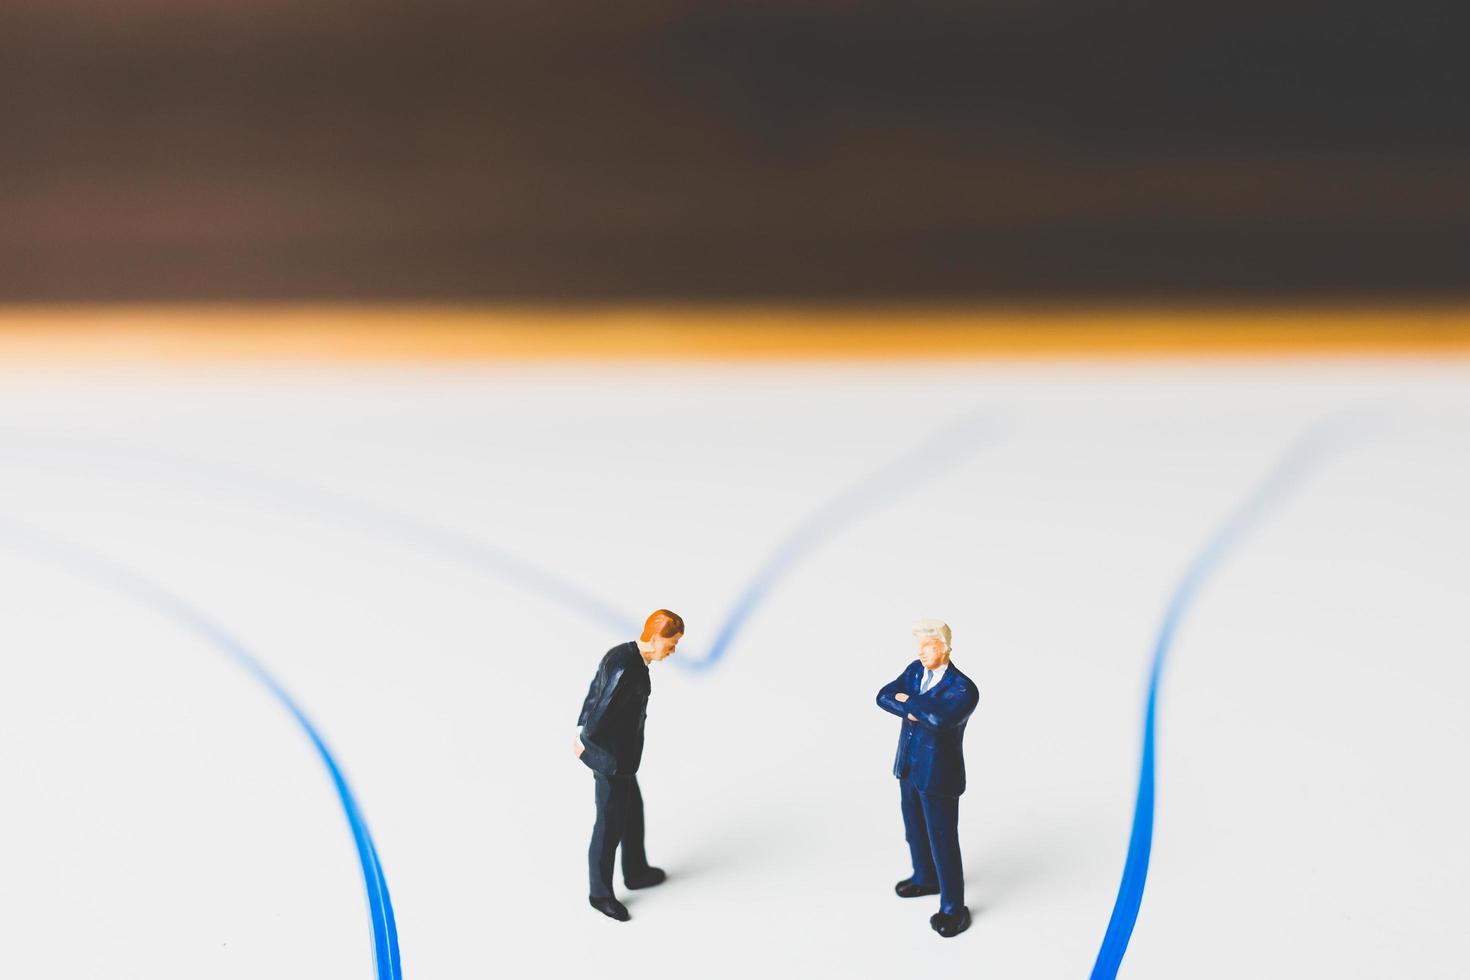 Miniature businessmen standing on an arrow pathway, business decision concept photo